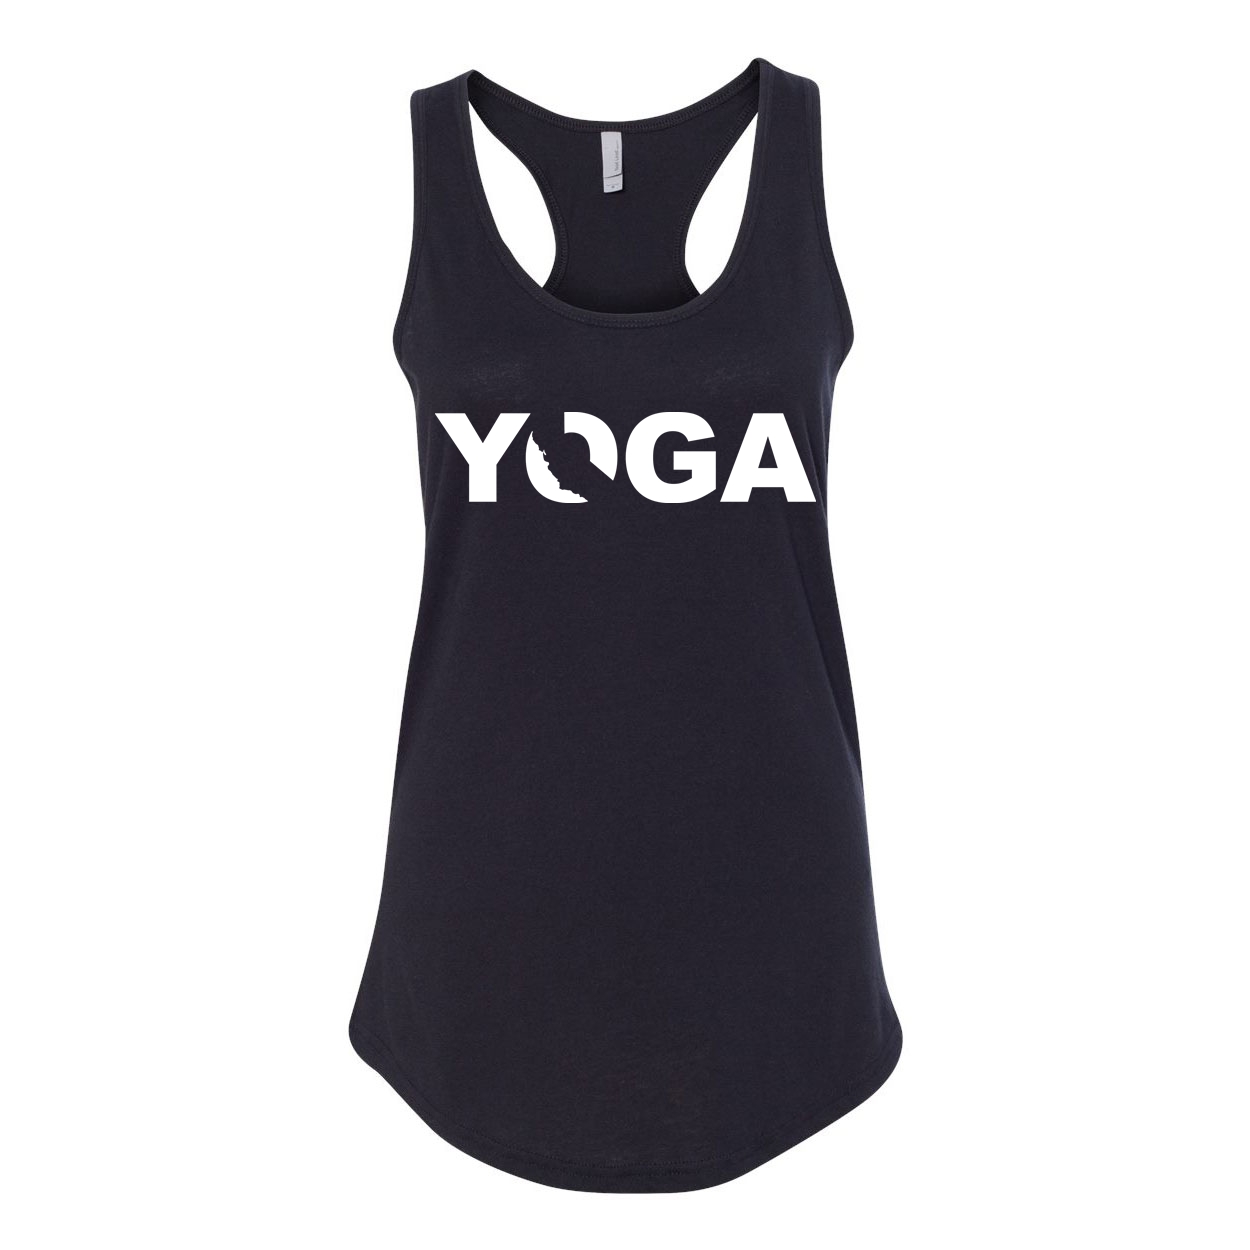 Yoga California Classic Women's Racerback Tank Top Black (White Logo)